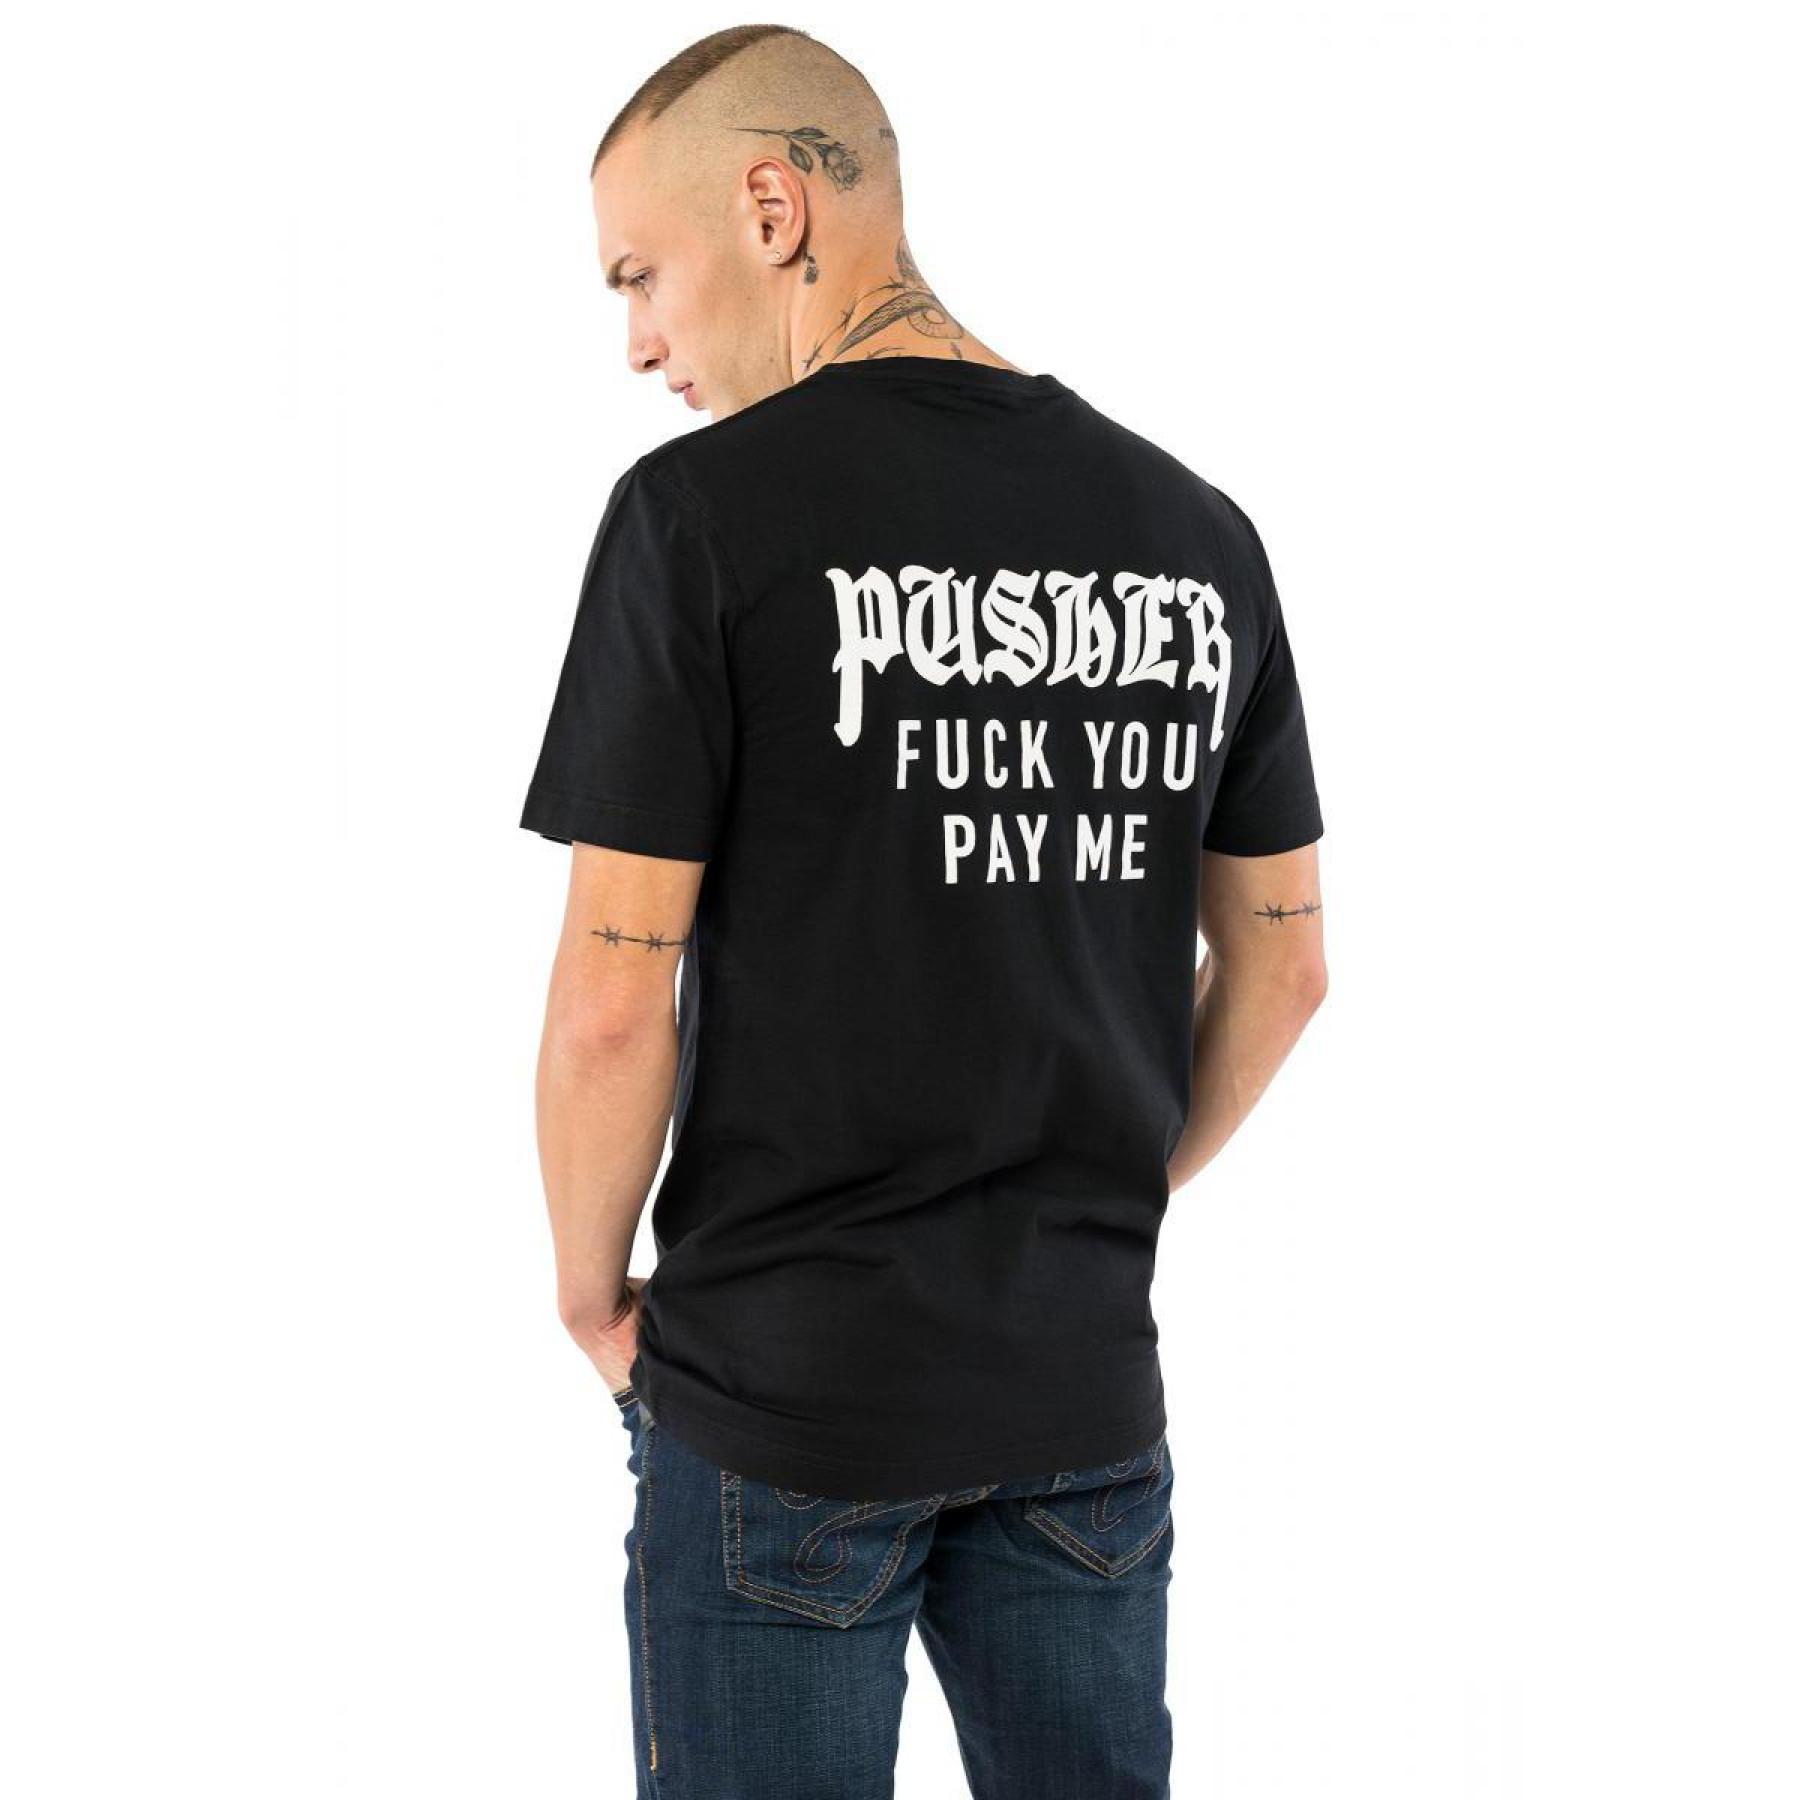 T-shirt Pusher pay me